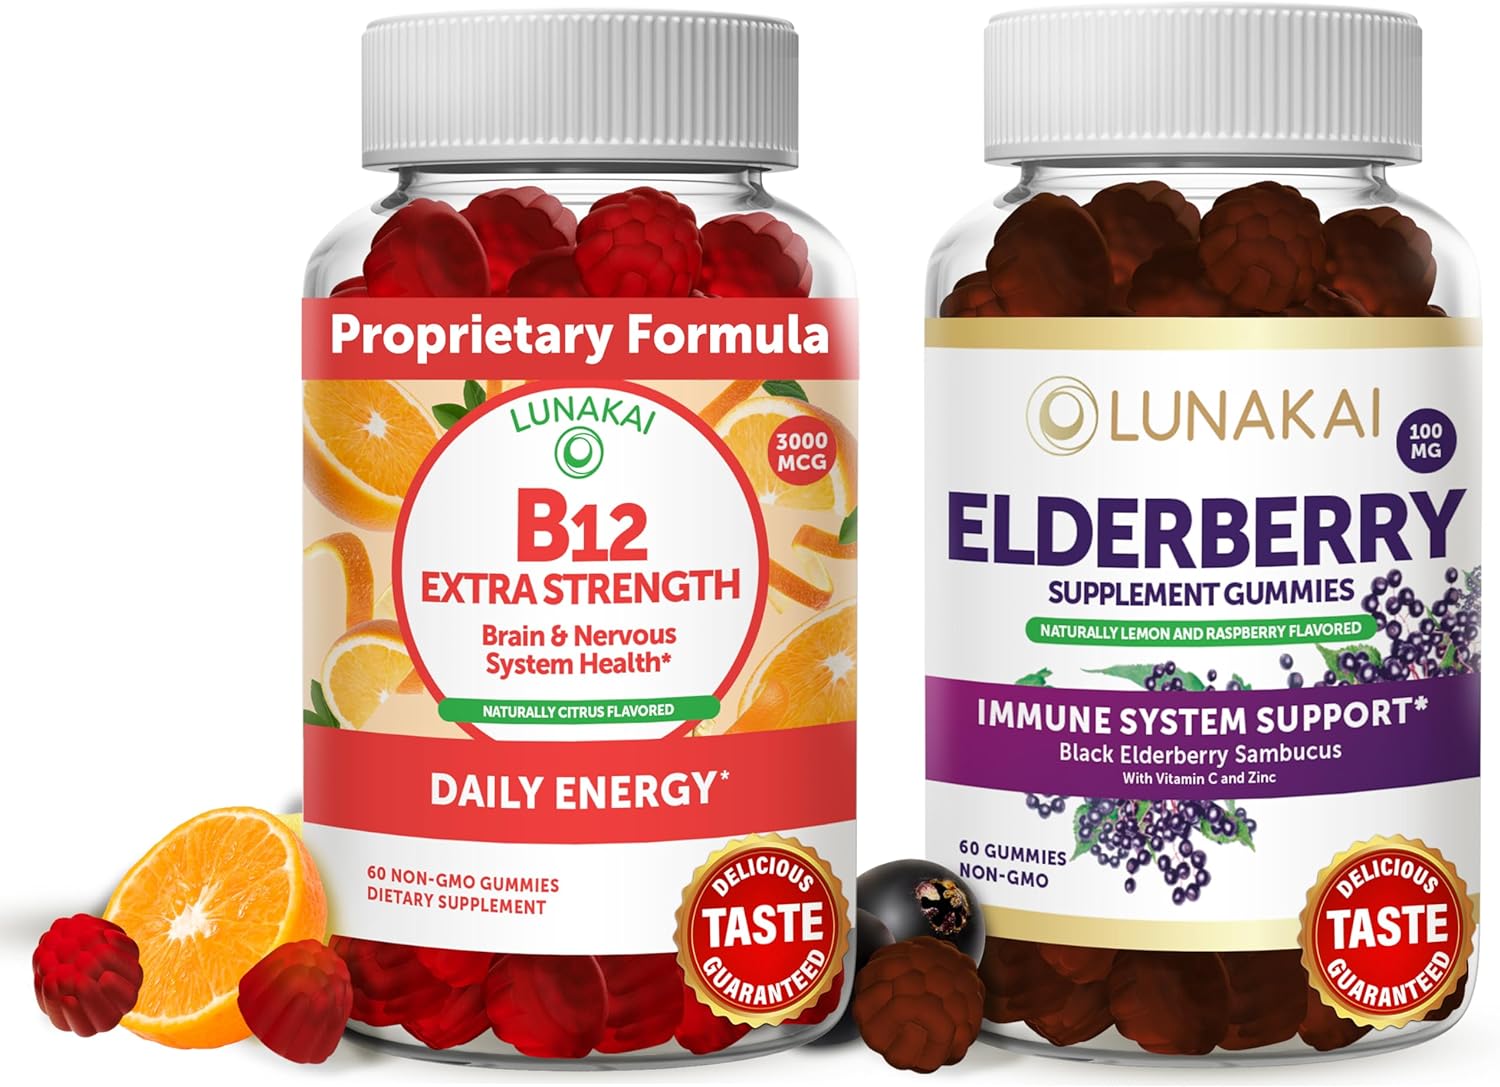 Vitamin B12 and Elderberry Gummies Bundle - Non-GMO, Gluten Free, No Corn Syrup, All Natural Supplements- 60 ct Vitamin B12 Gummies and 60 ct Elderberry Gummies - 30 Days Supply